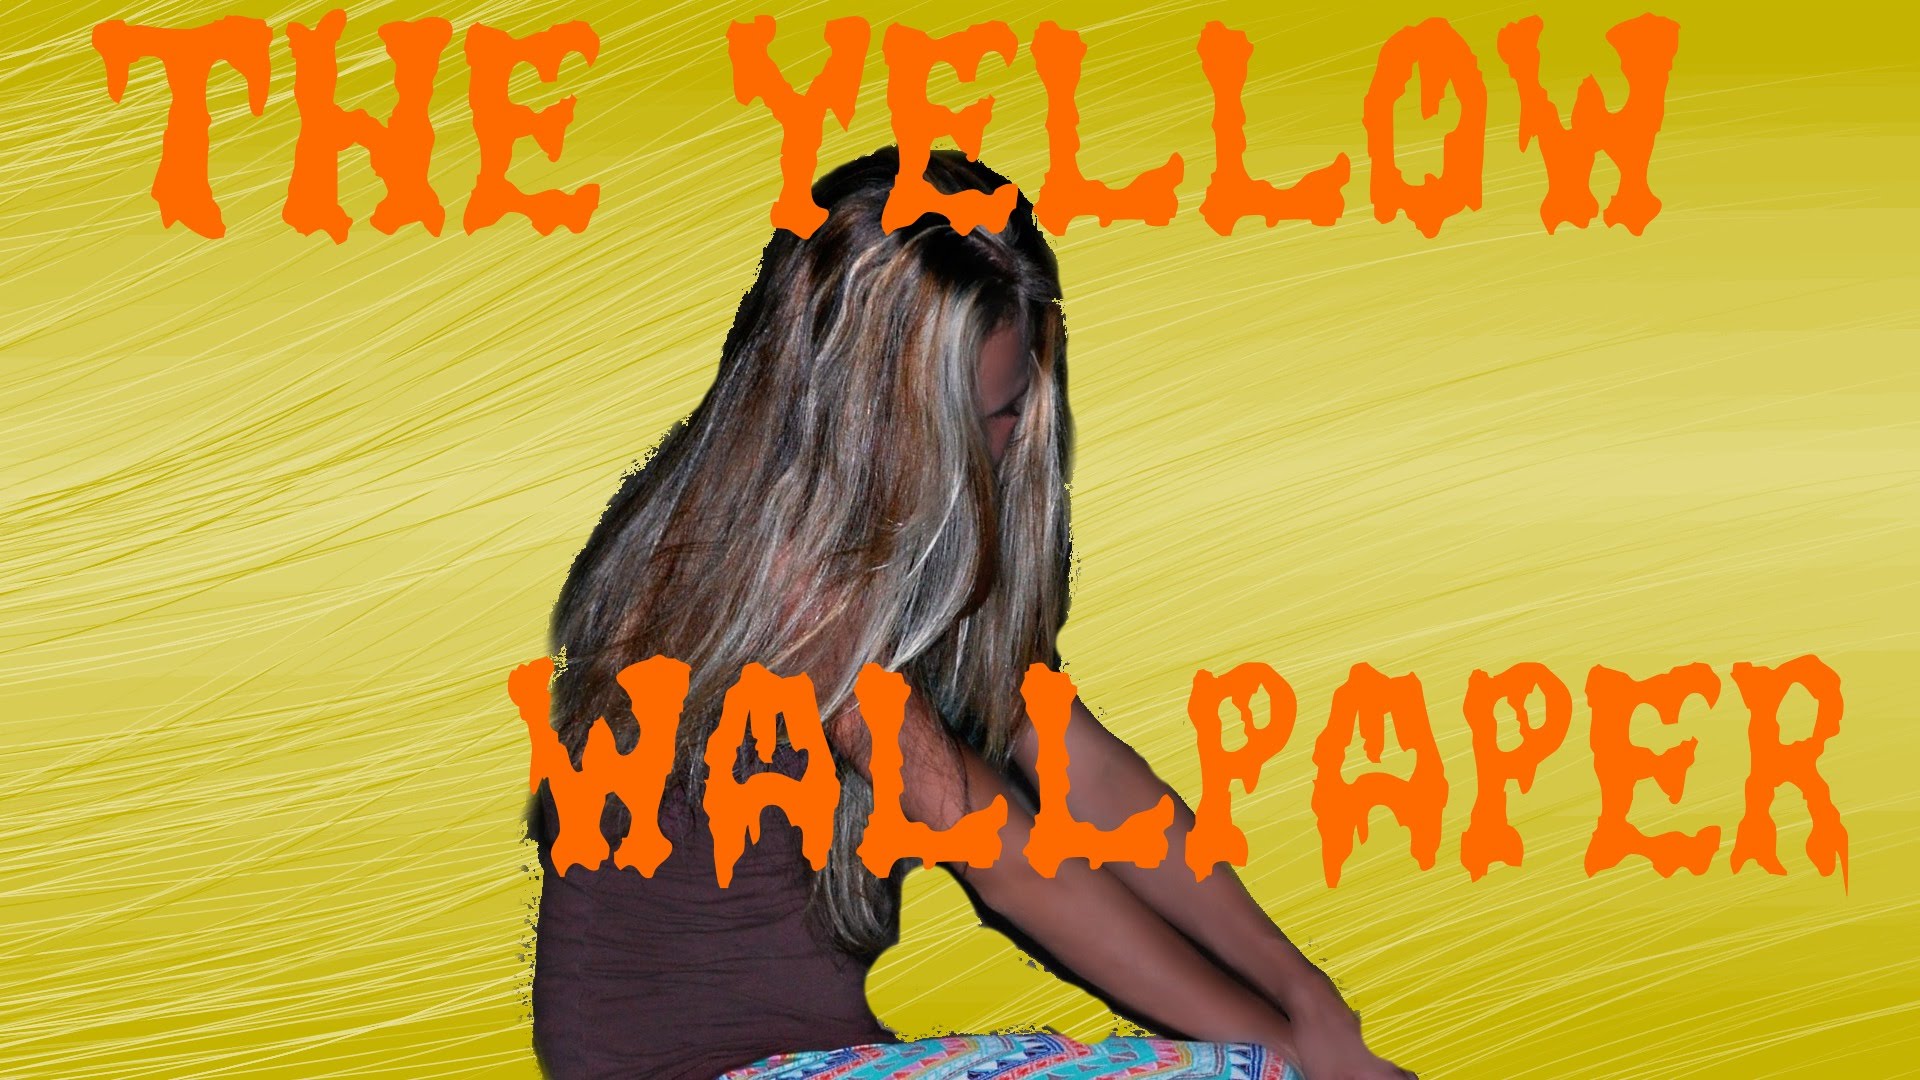 190 Best The Yellow Wallpaper ideas  yellow wallpaper gilman wallpaper